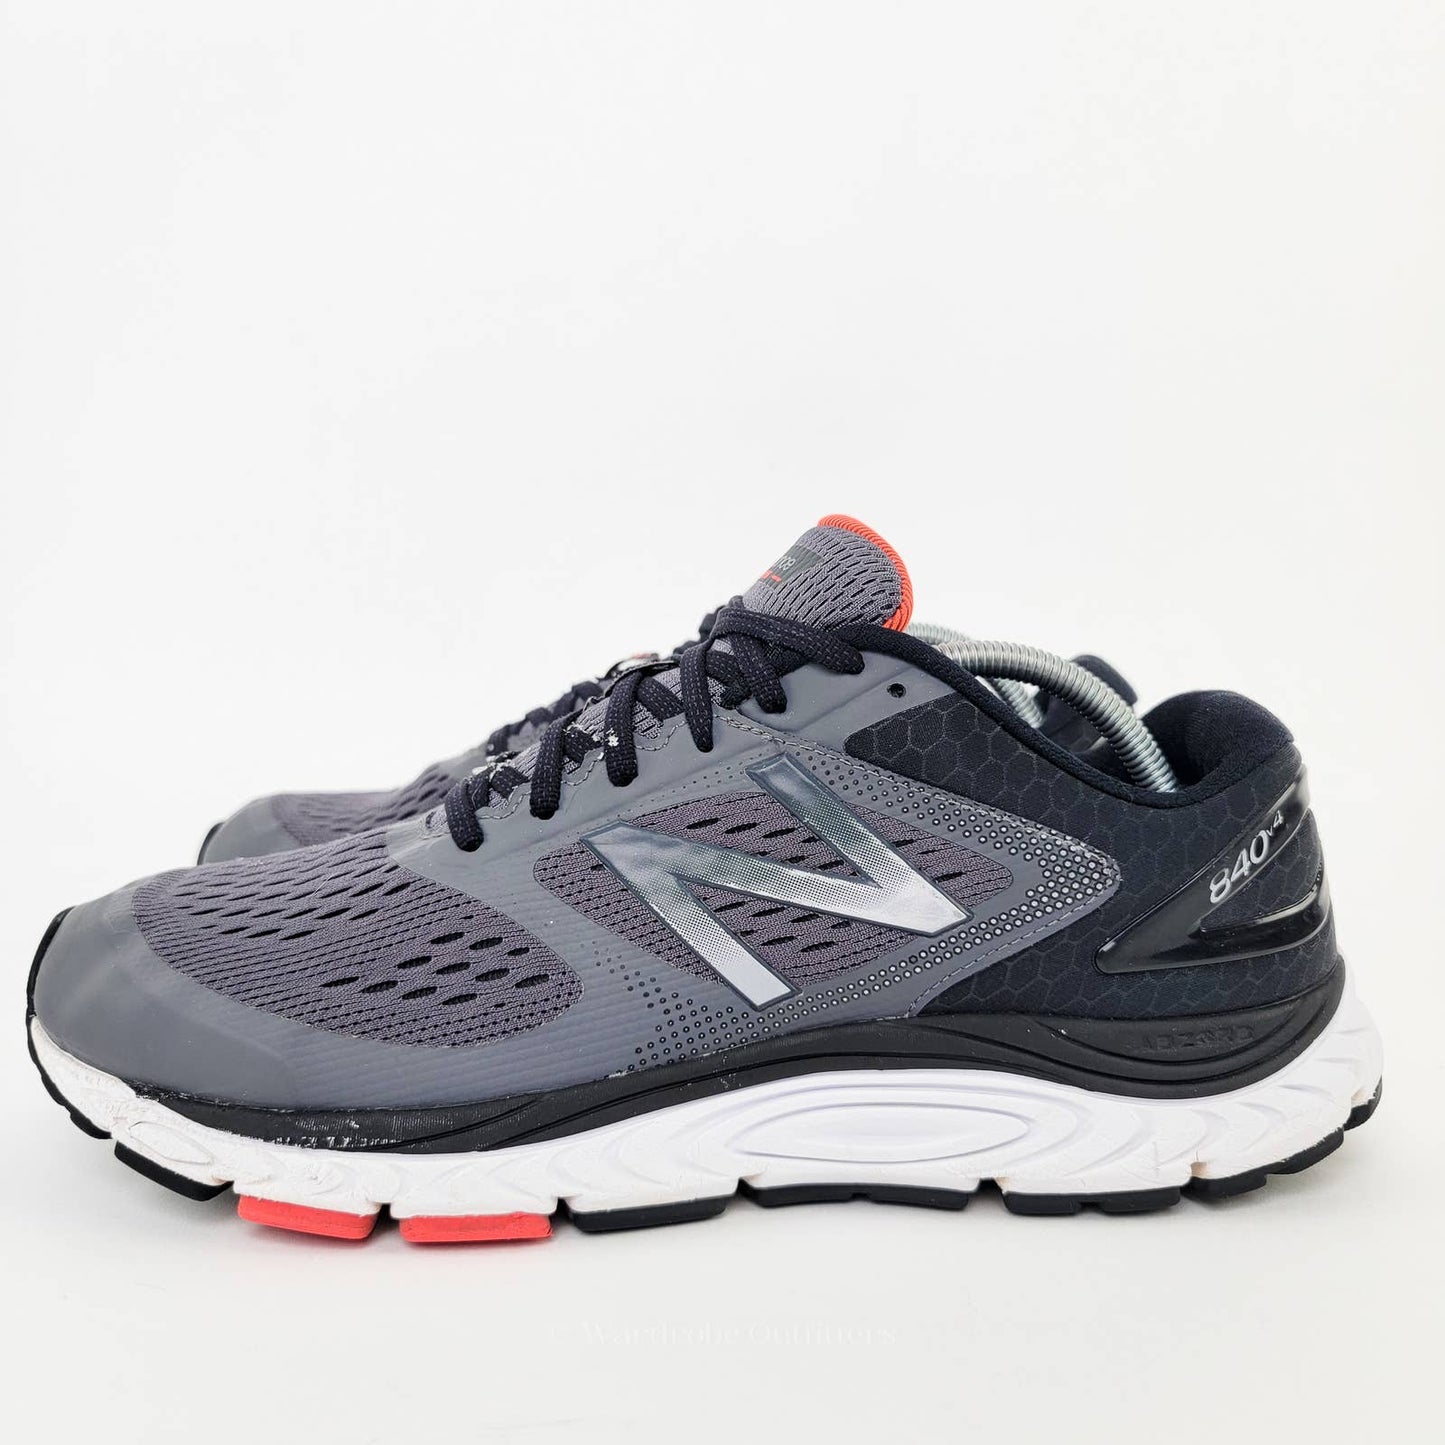 New Balance 840v4 'Magnet' Running Shoes - 11